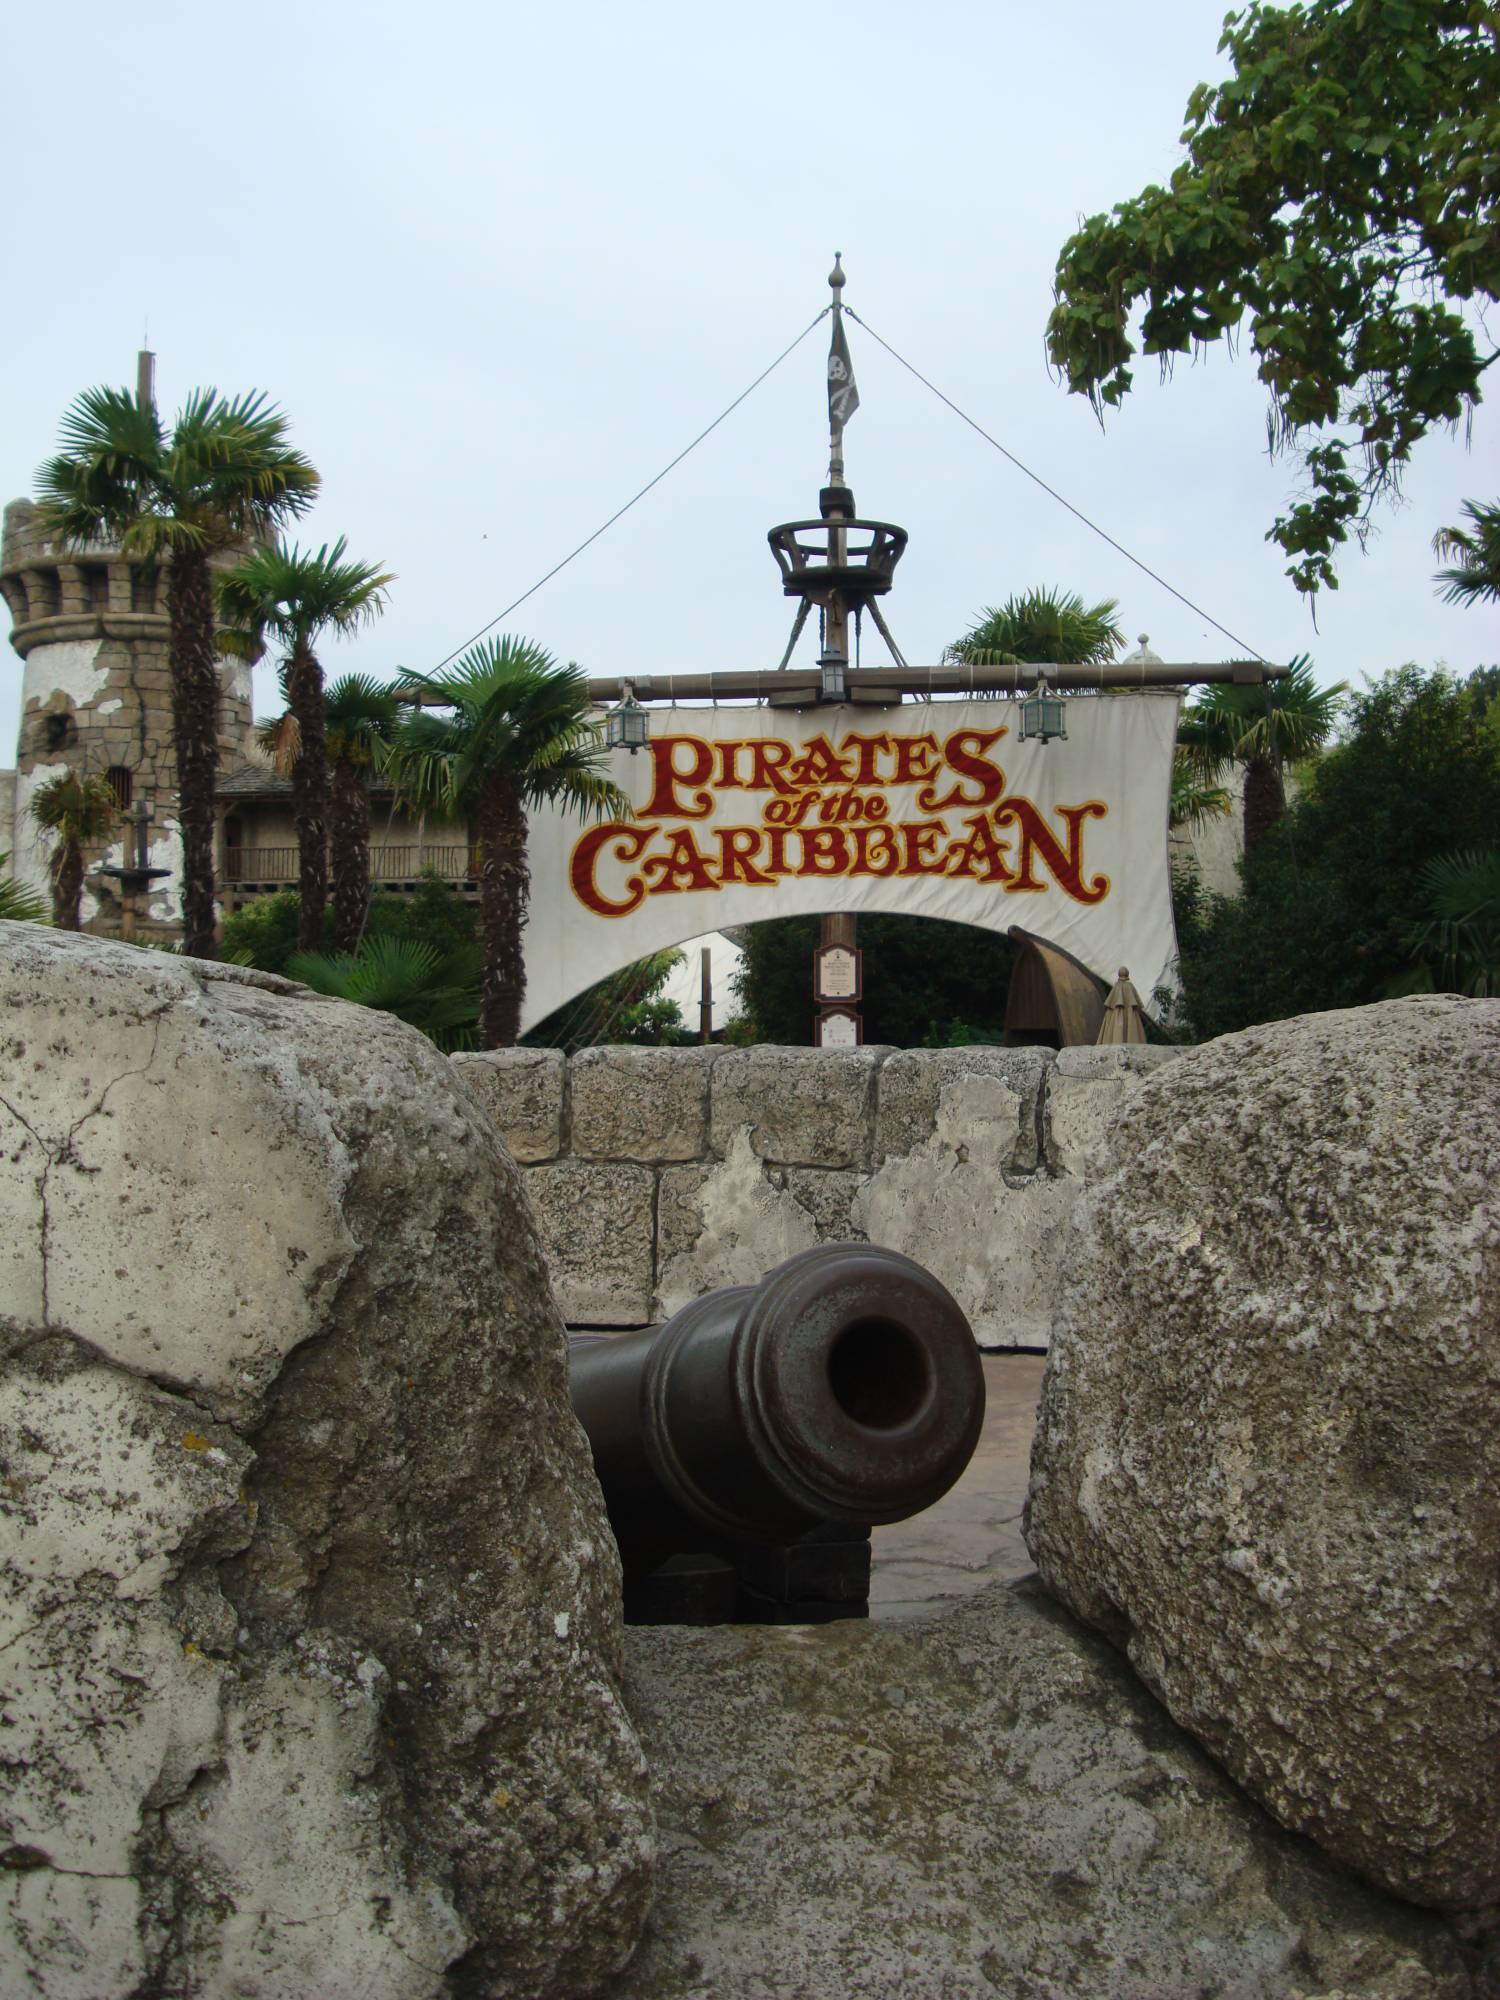 Disneyland Paris - Pirates of the Caribbean